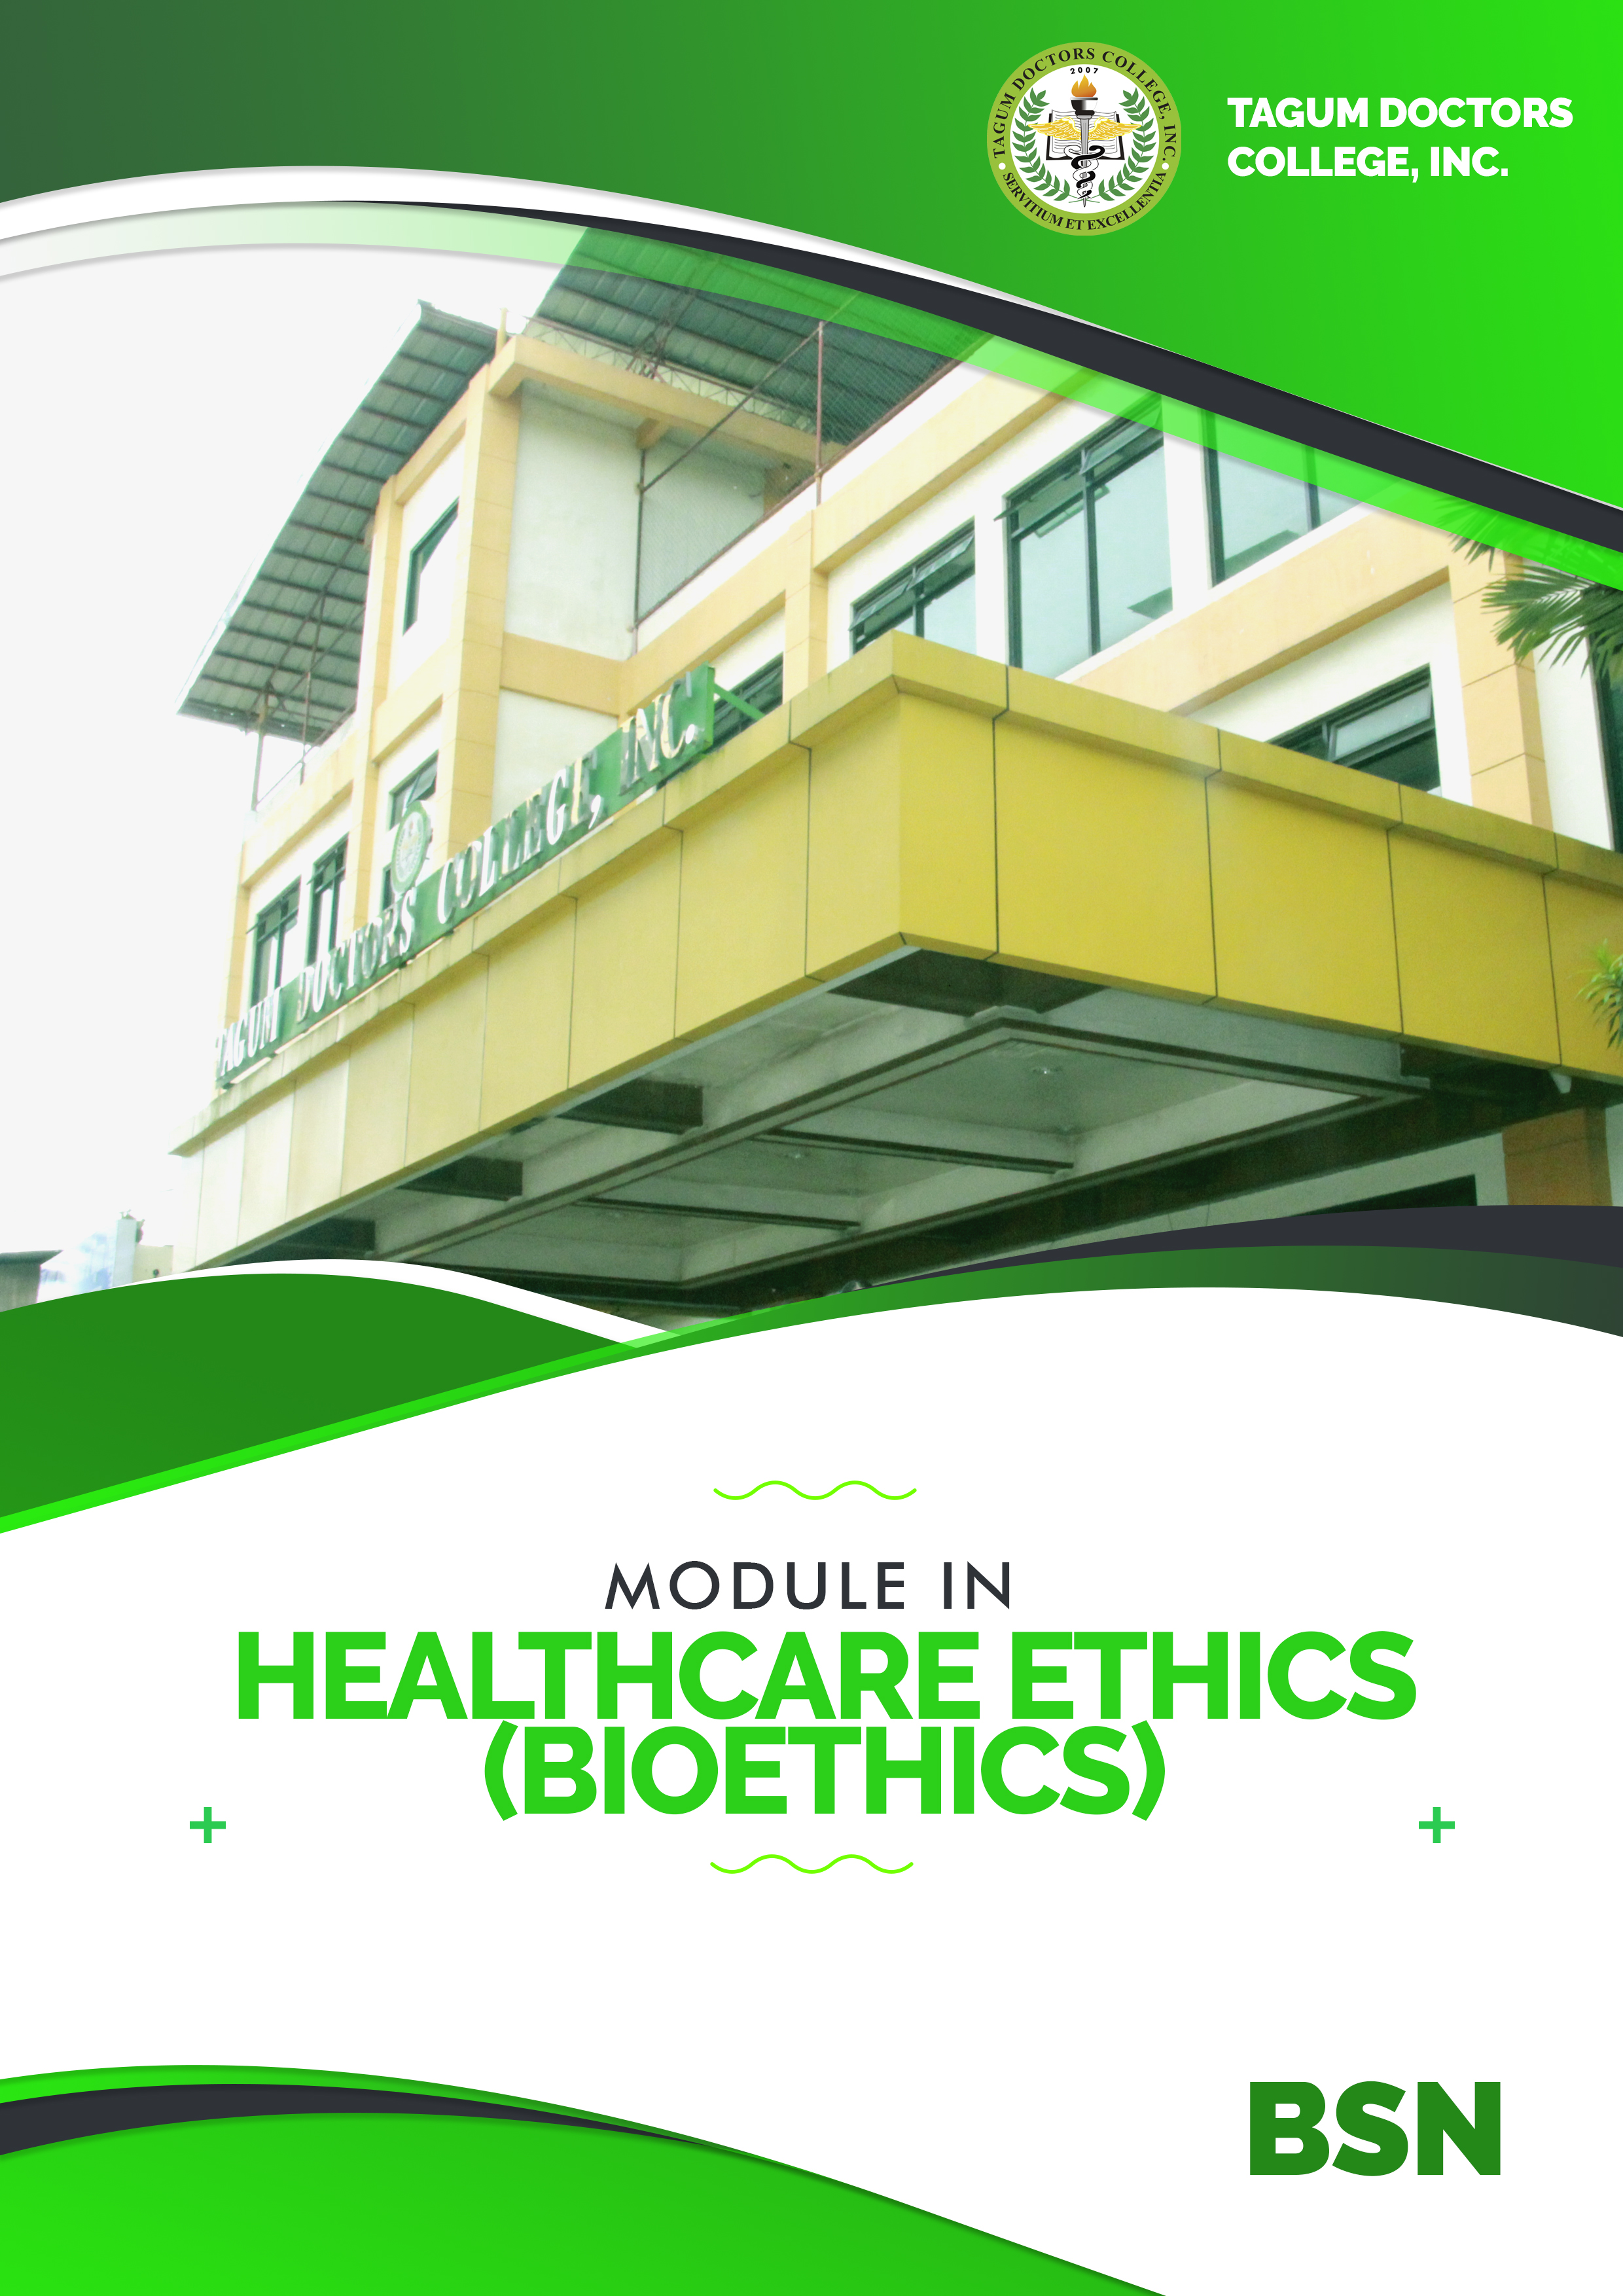 Health Care Ethics - BSN 2A